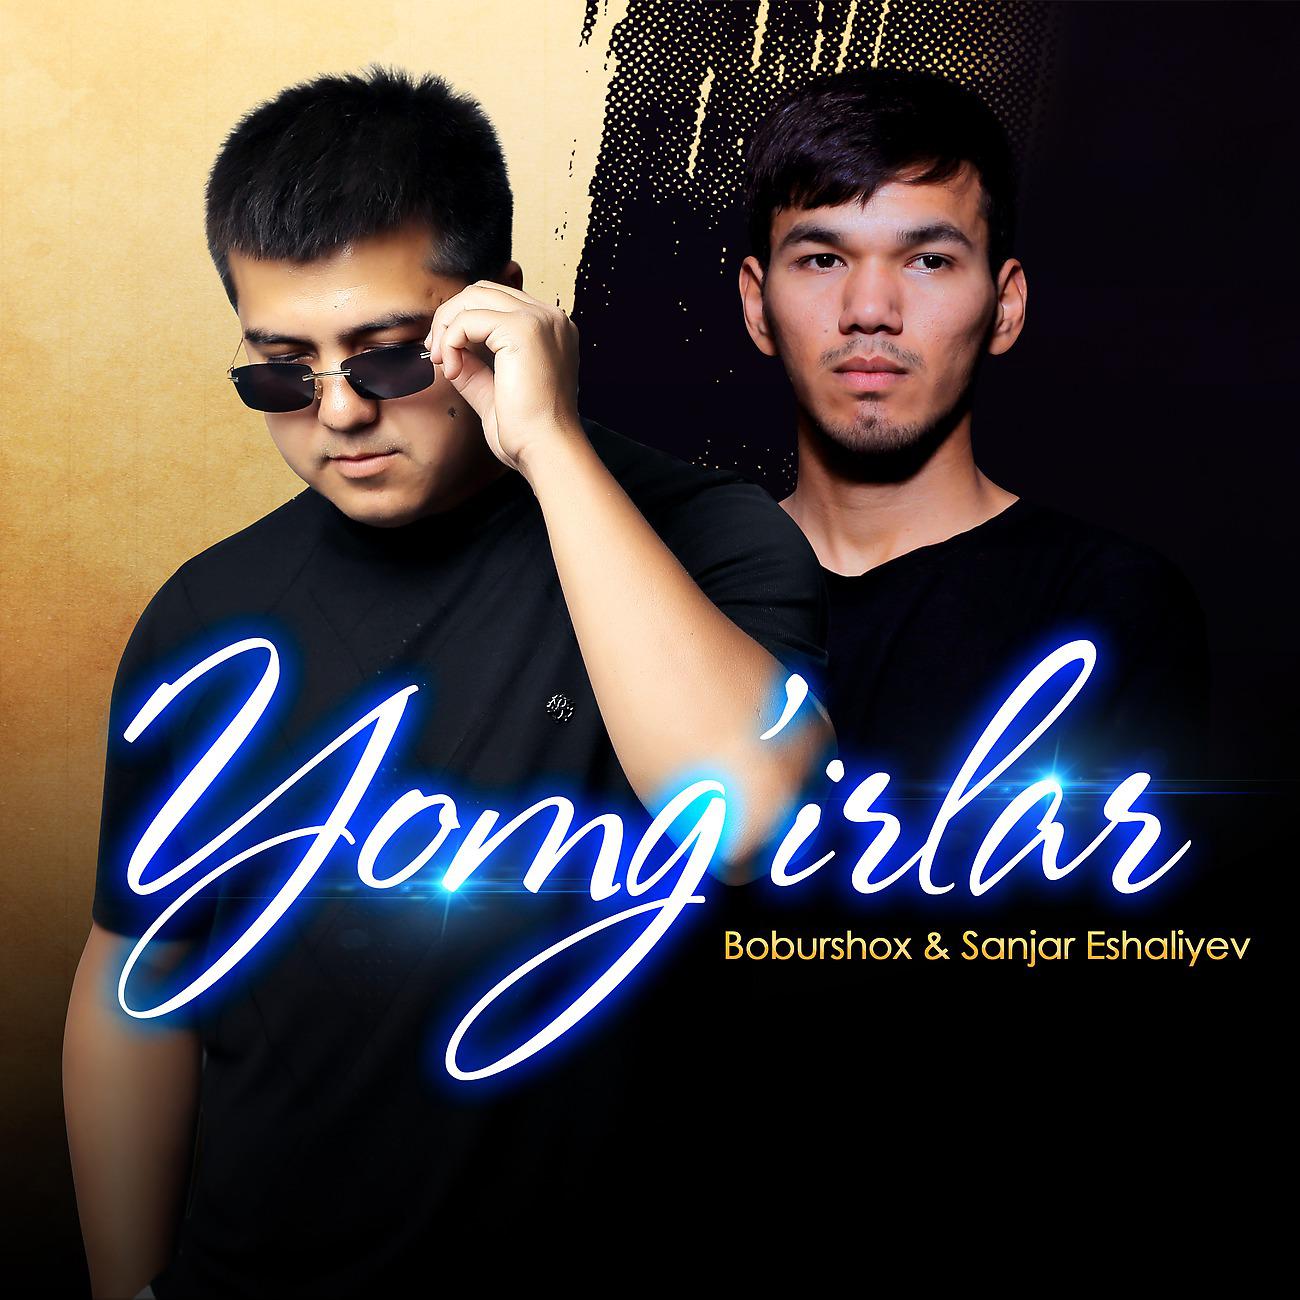 Постер альбома Yomg'irlar